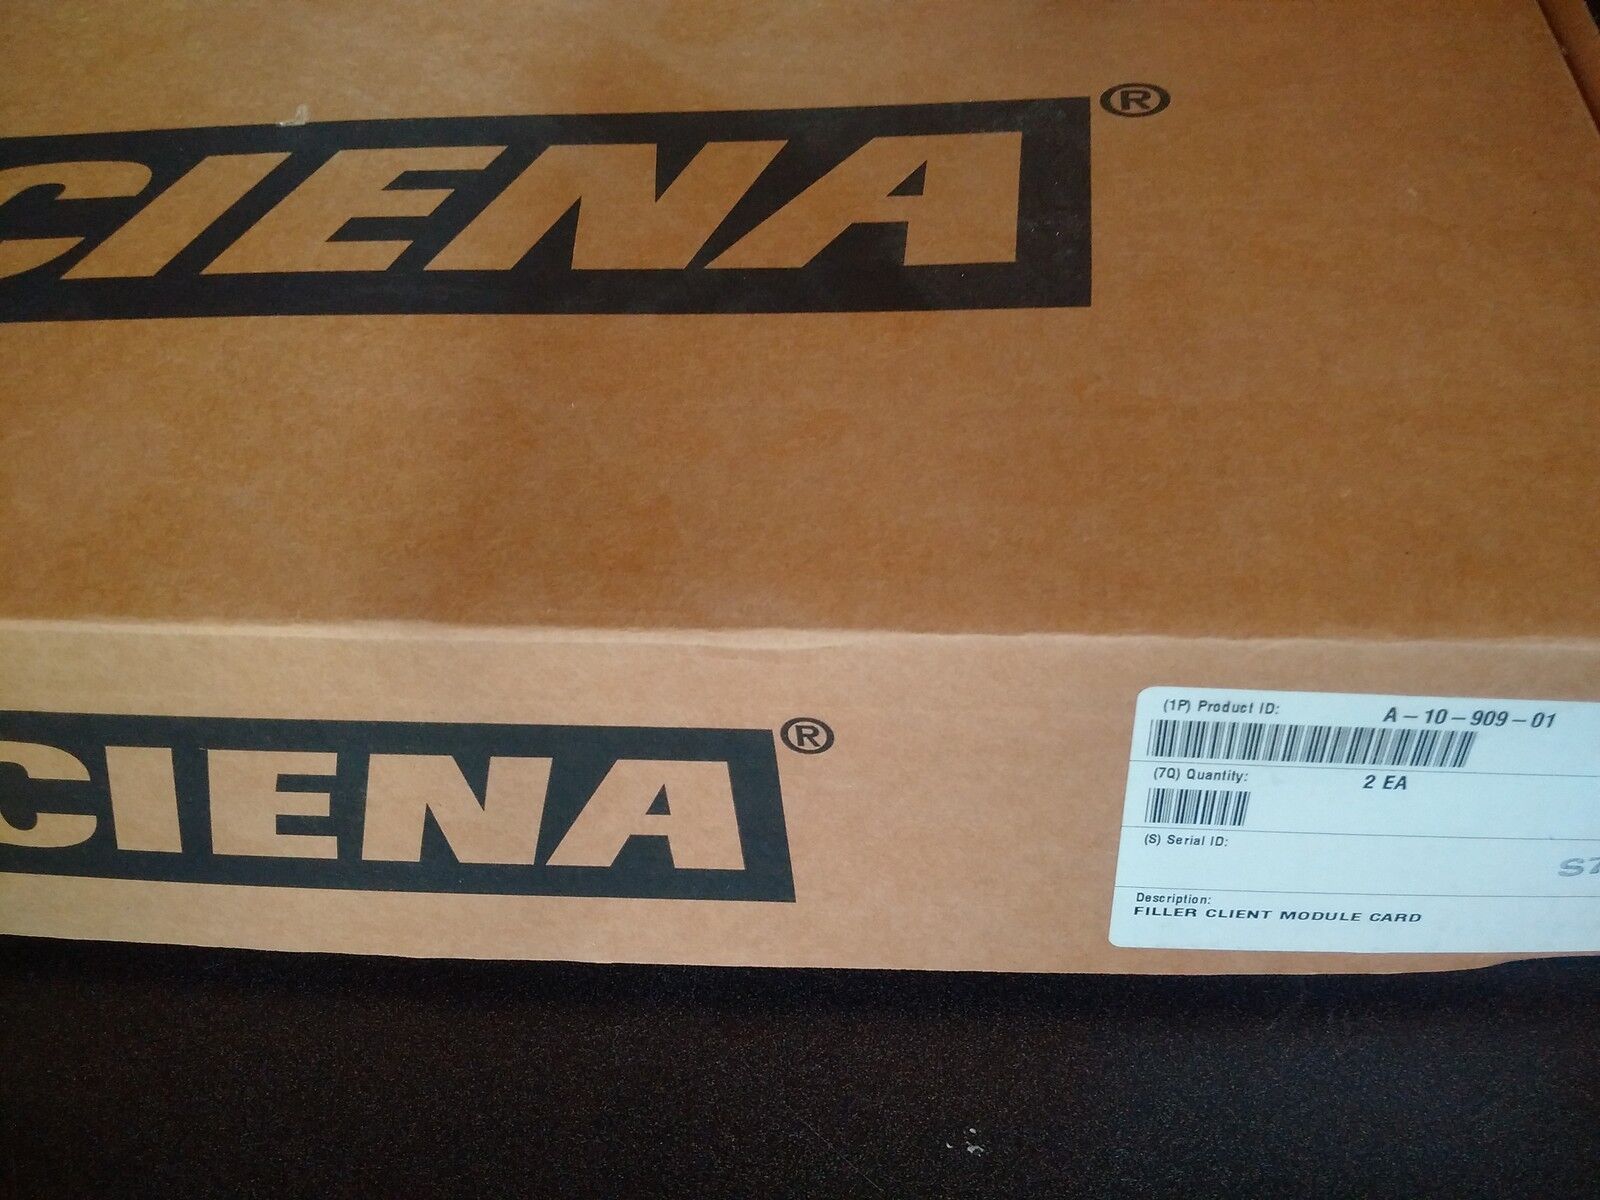 Ciena A-10-909-01 CLIENT FILLER MODULE (2 PCS)  NEW OPEN BOX